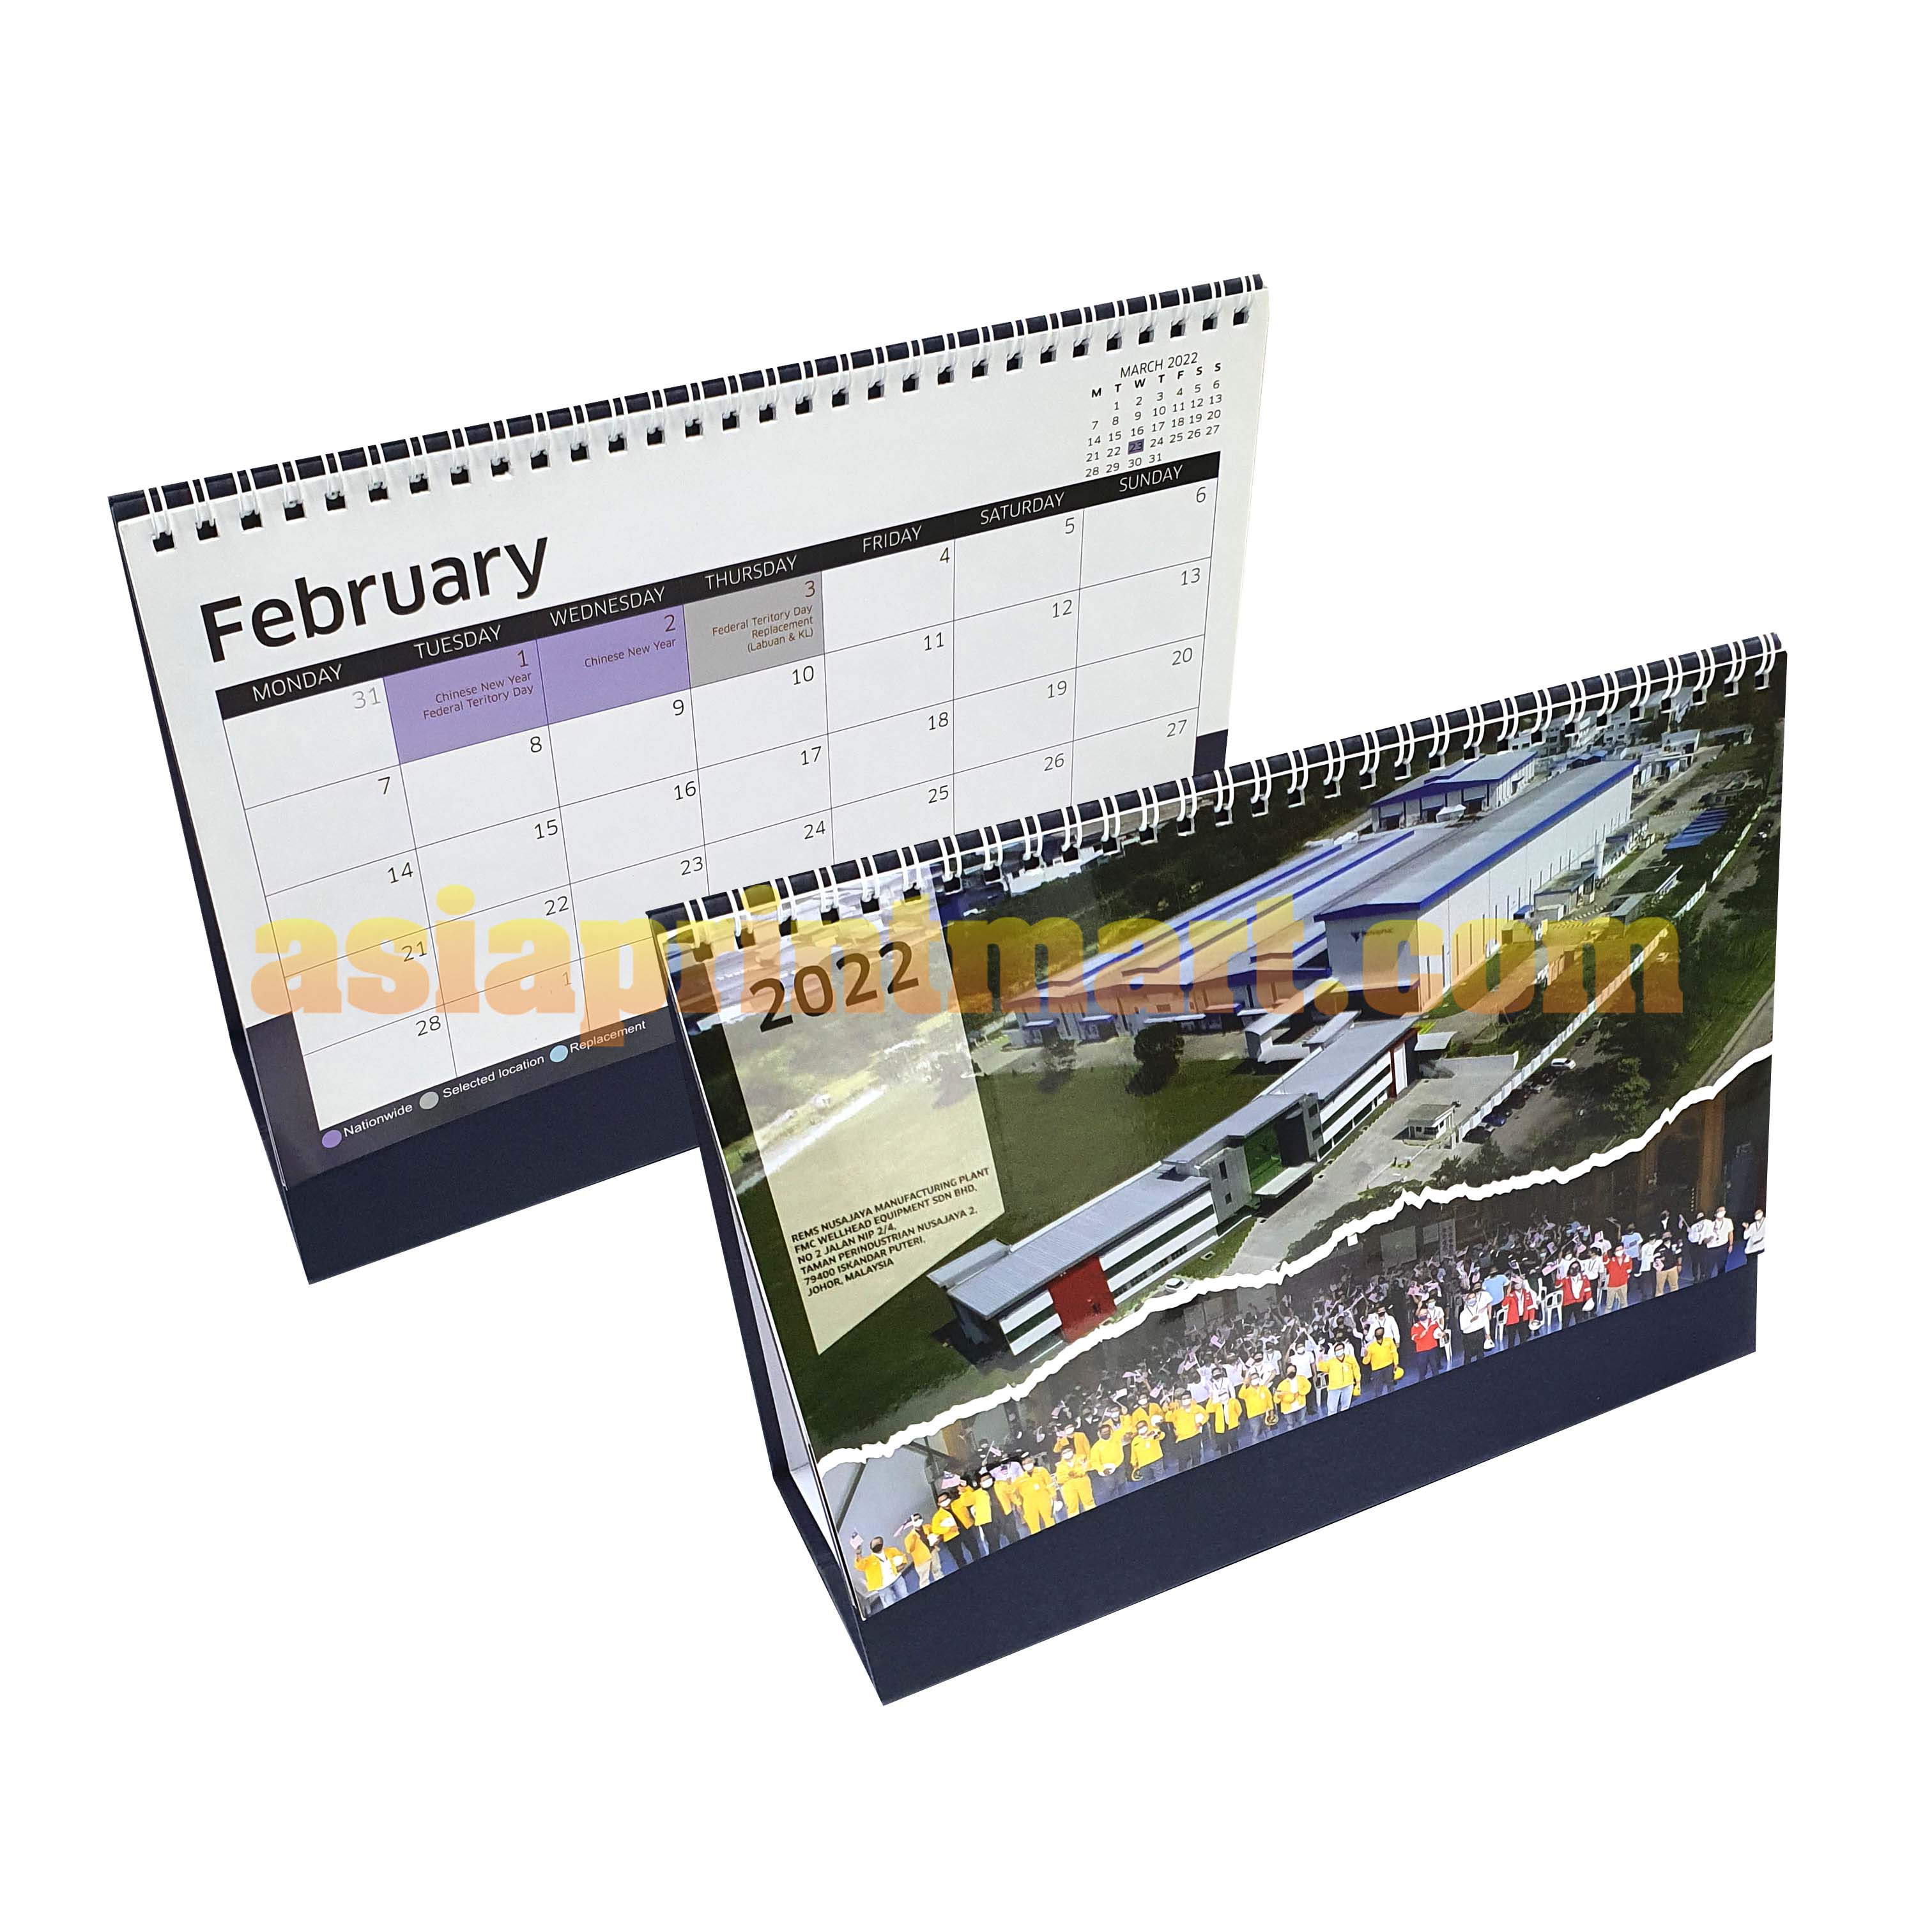 Calendar shop, Calendar printing company, Table calendar manufacturer,Ready made table calendars printing shop, Kilang cetak kalendar, corporate calendars printing